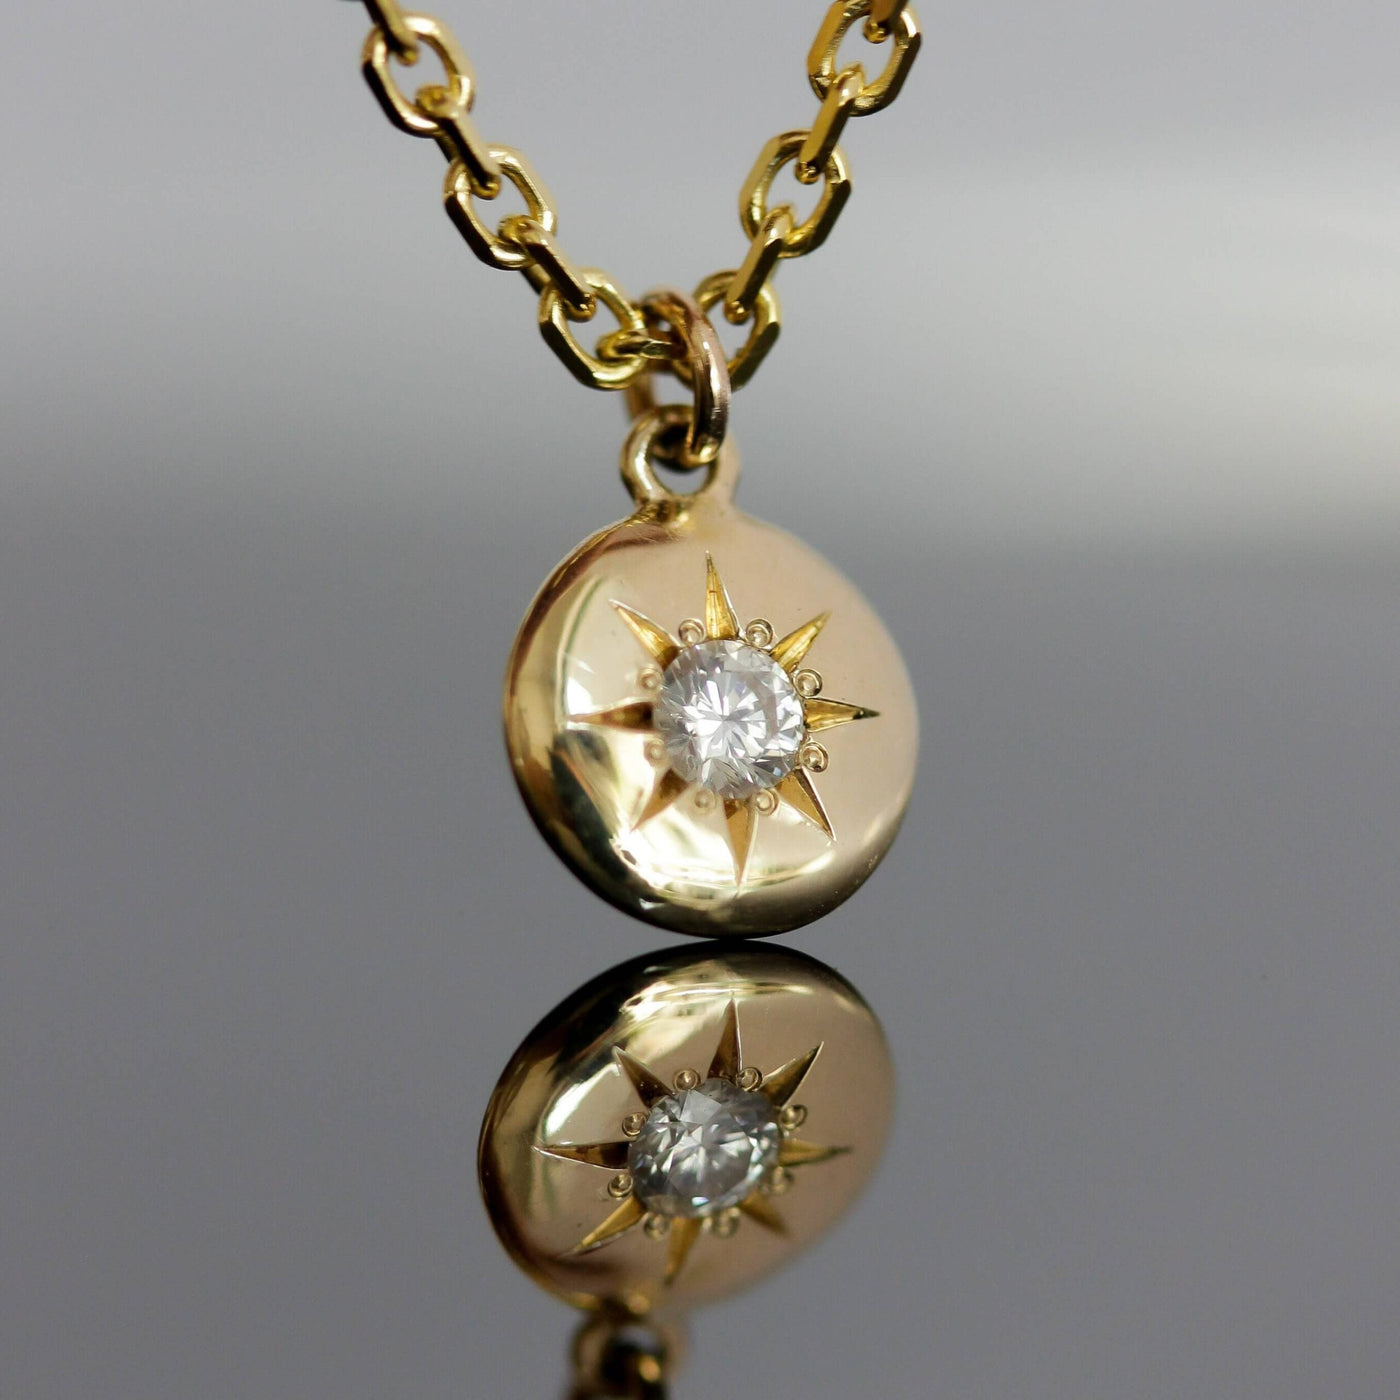 Solaris Necklace 14K Gold White Diamond Necklaces 